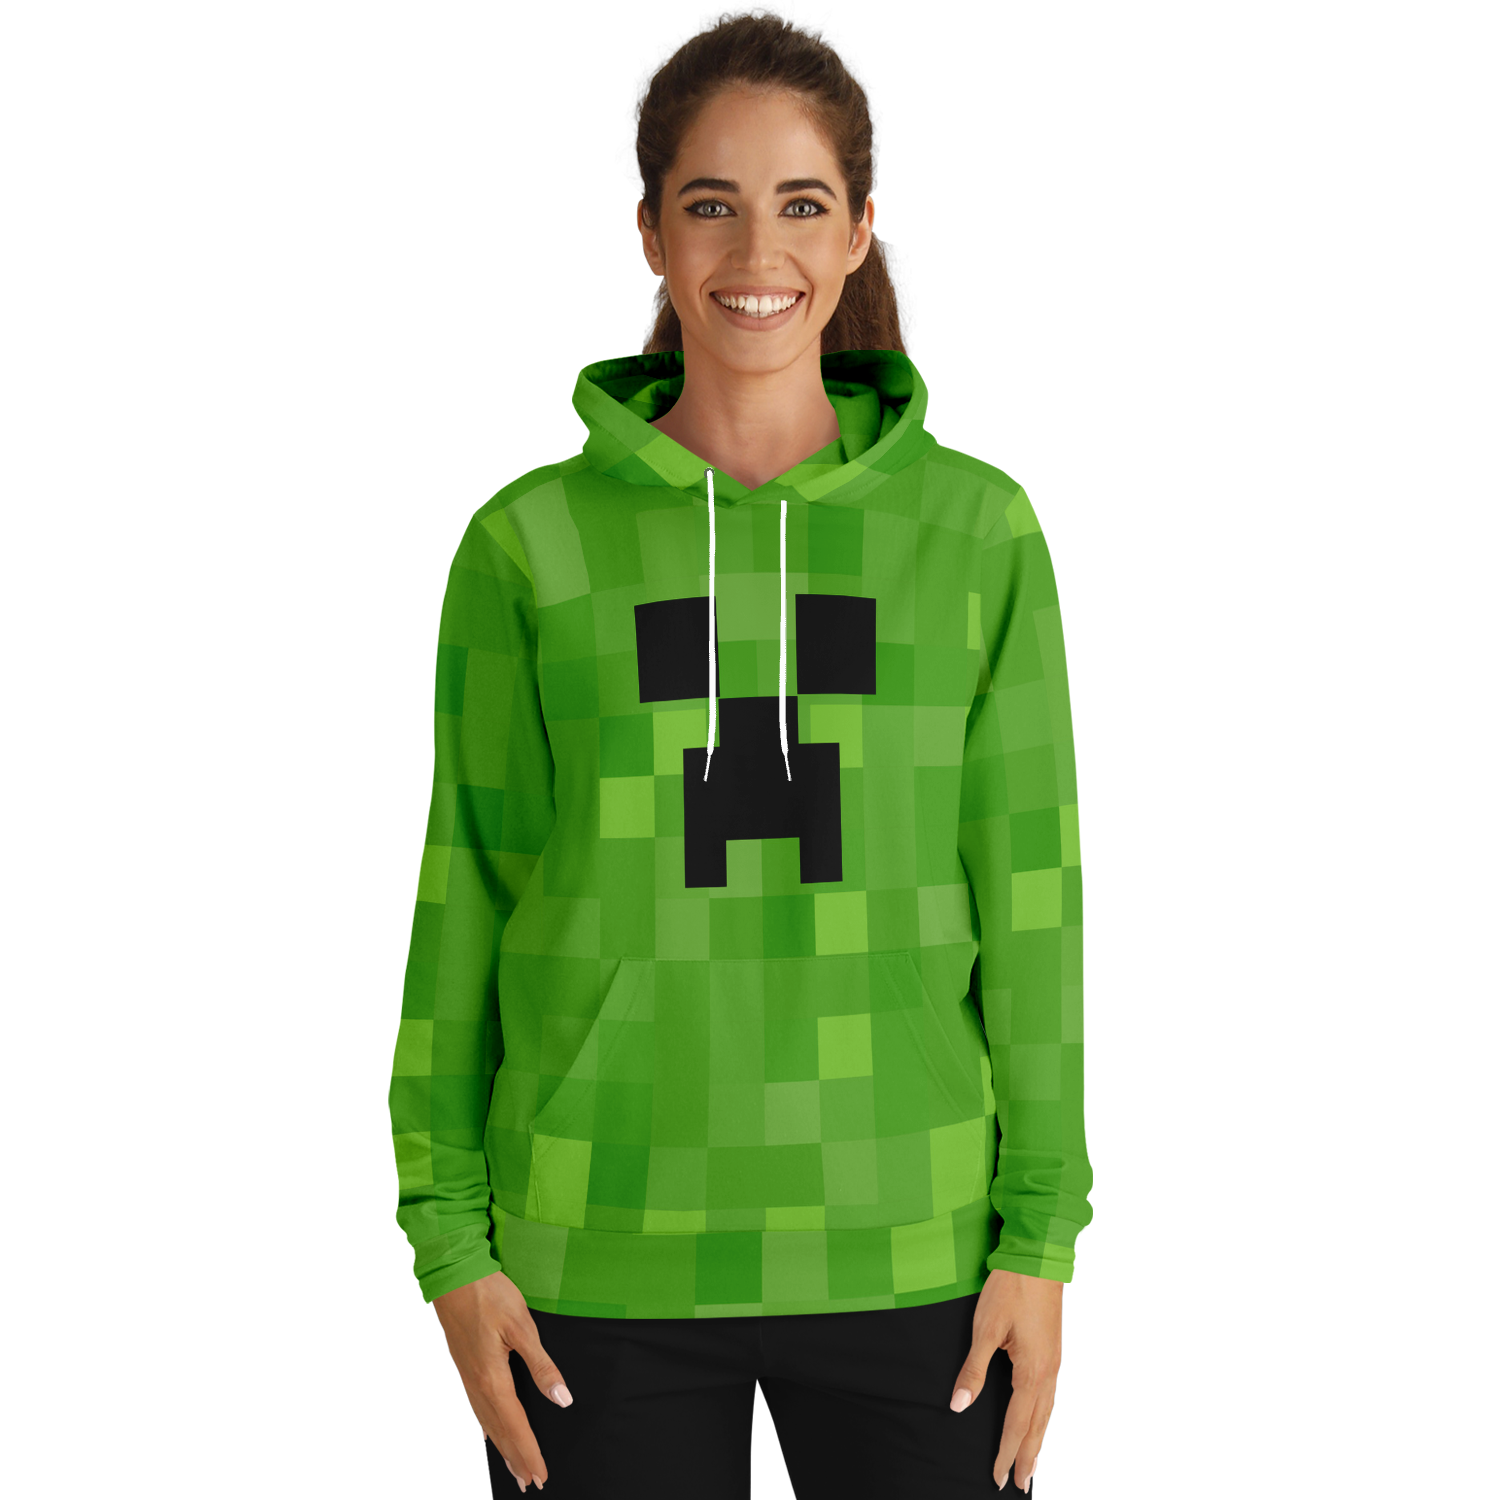 Minecraft Creeper Face Long Sleeve Black Youth Hooded Sweatshirt-XS